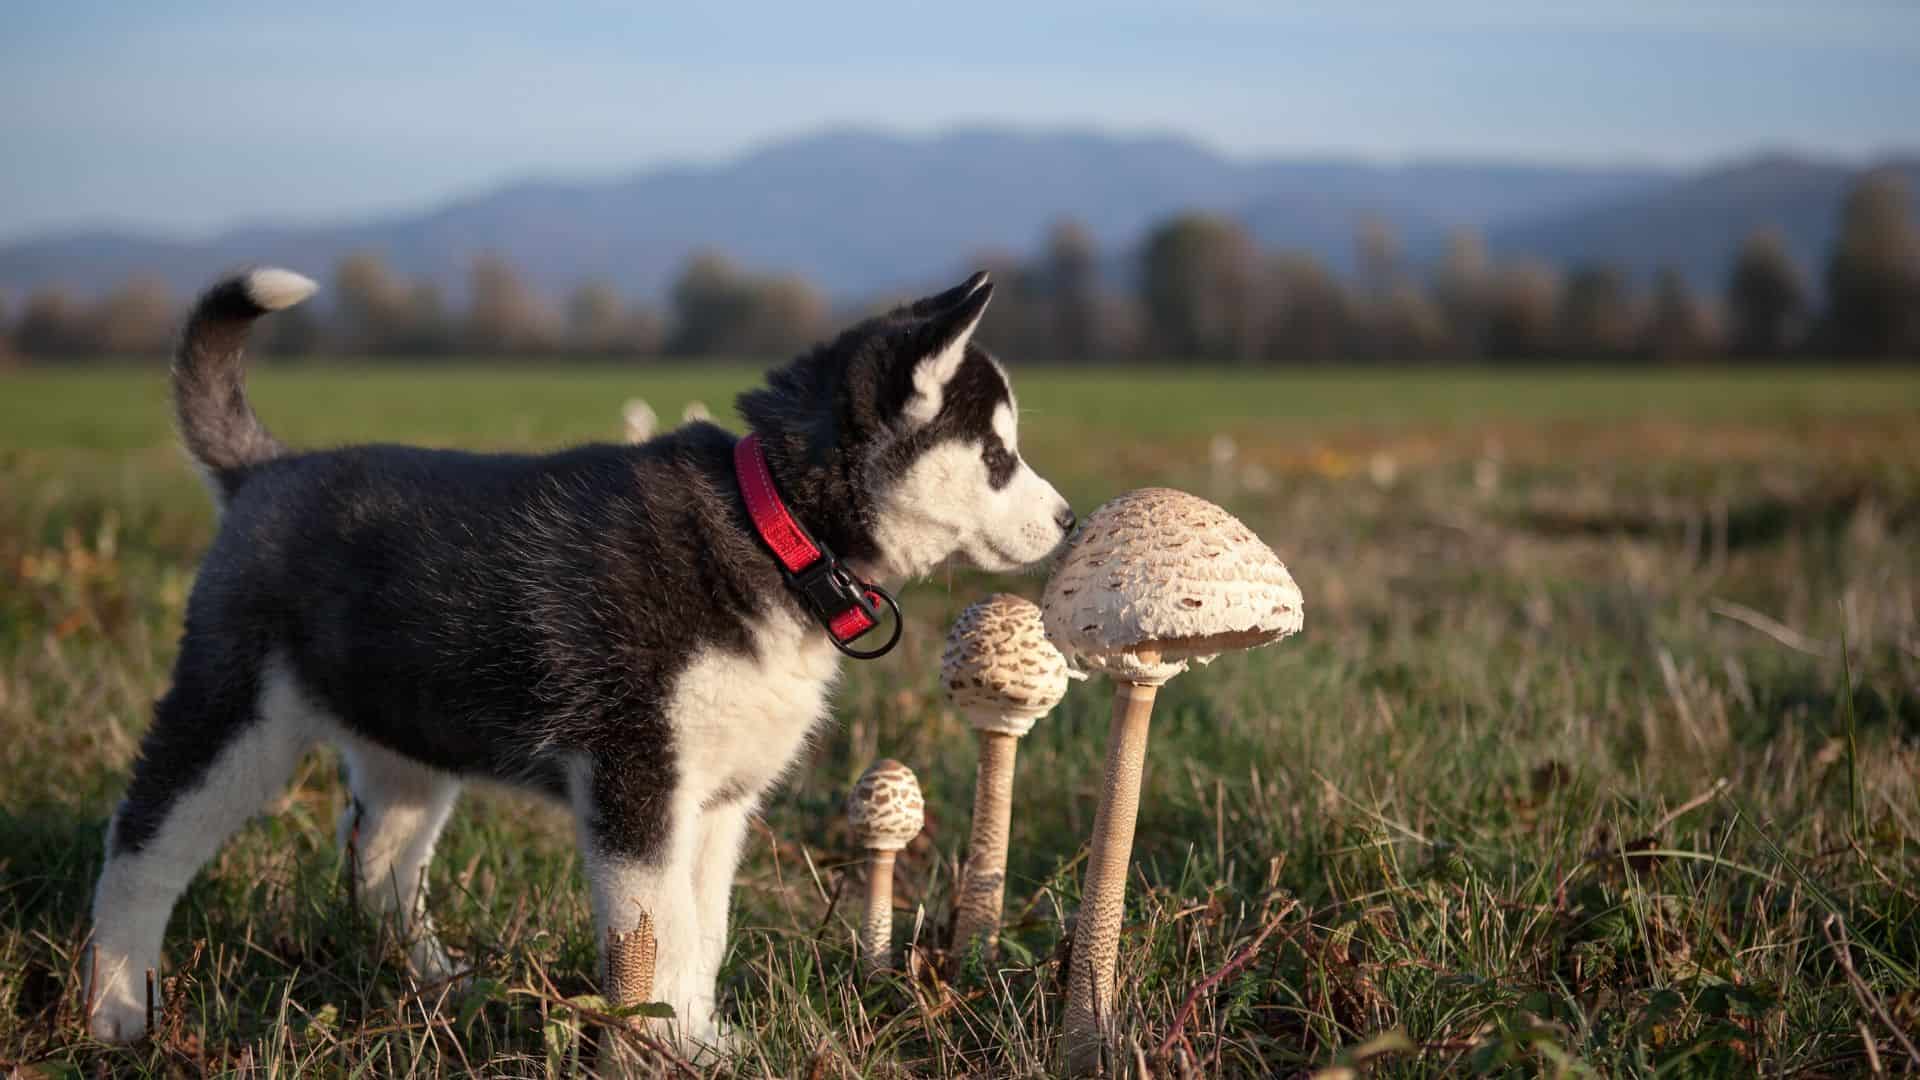 can dogs take mushrooms?